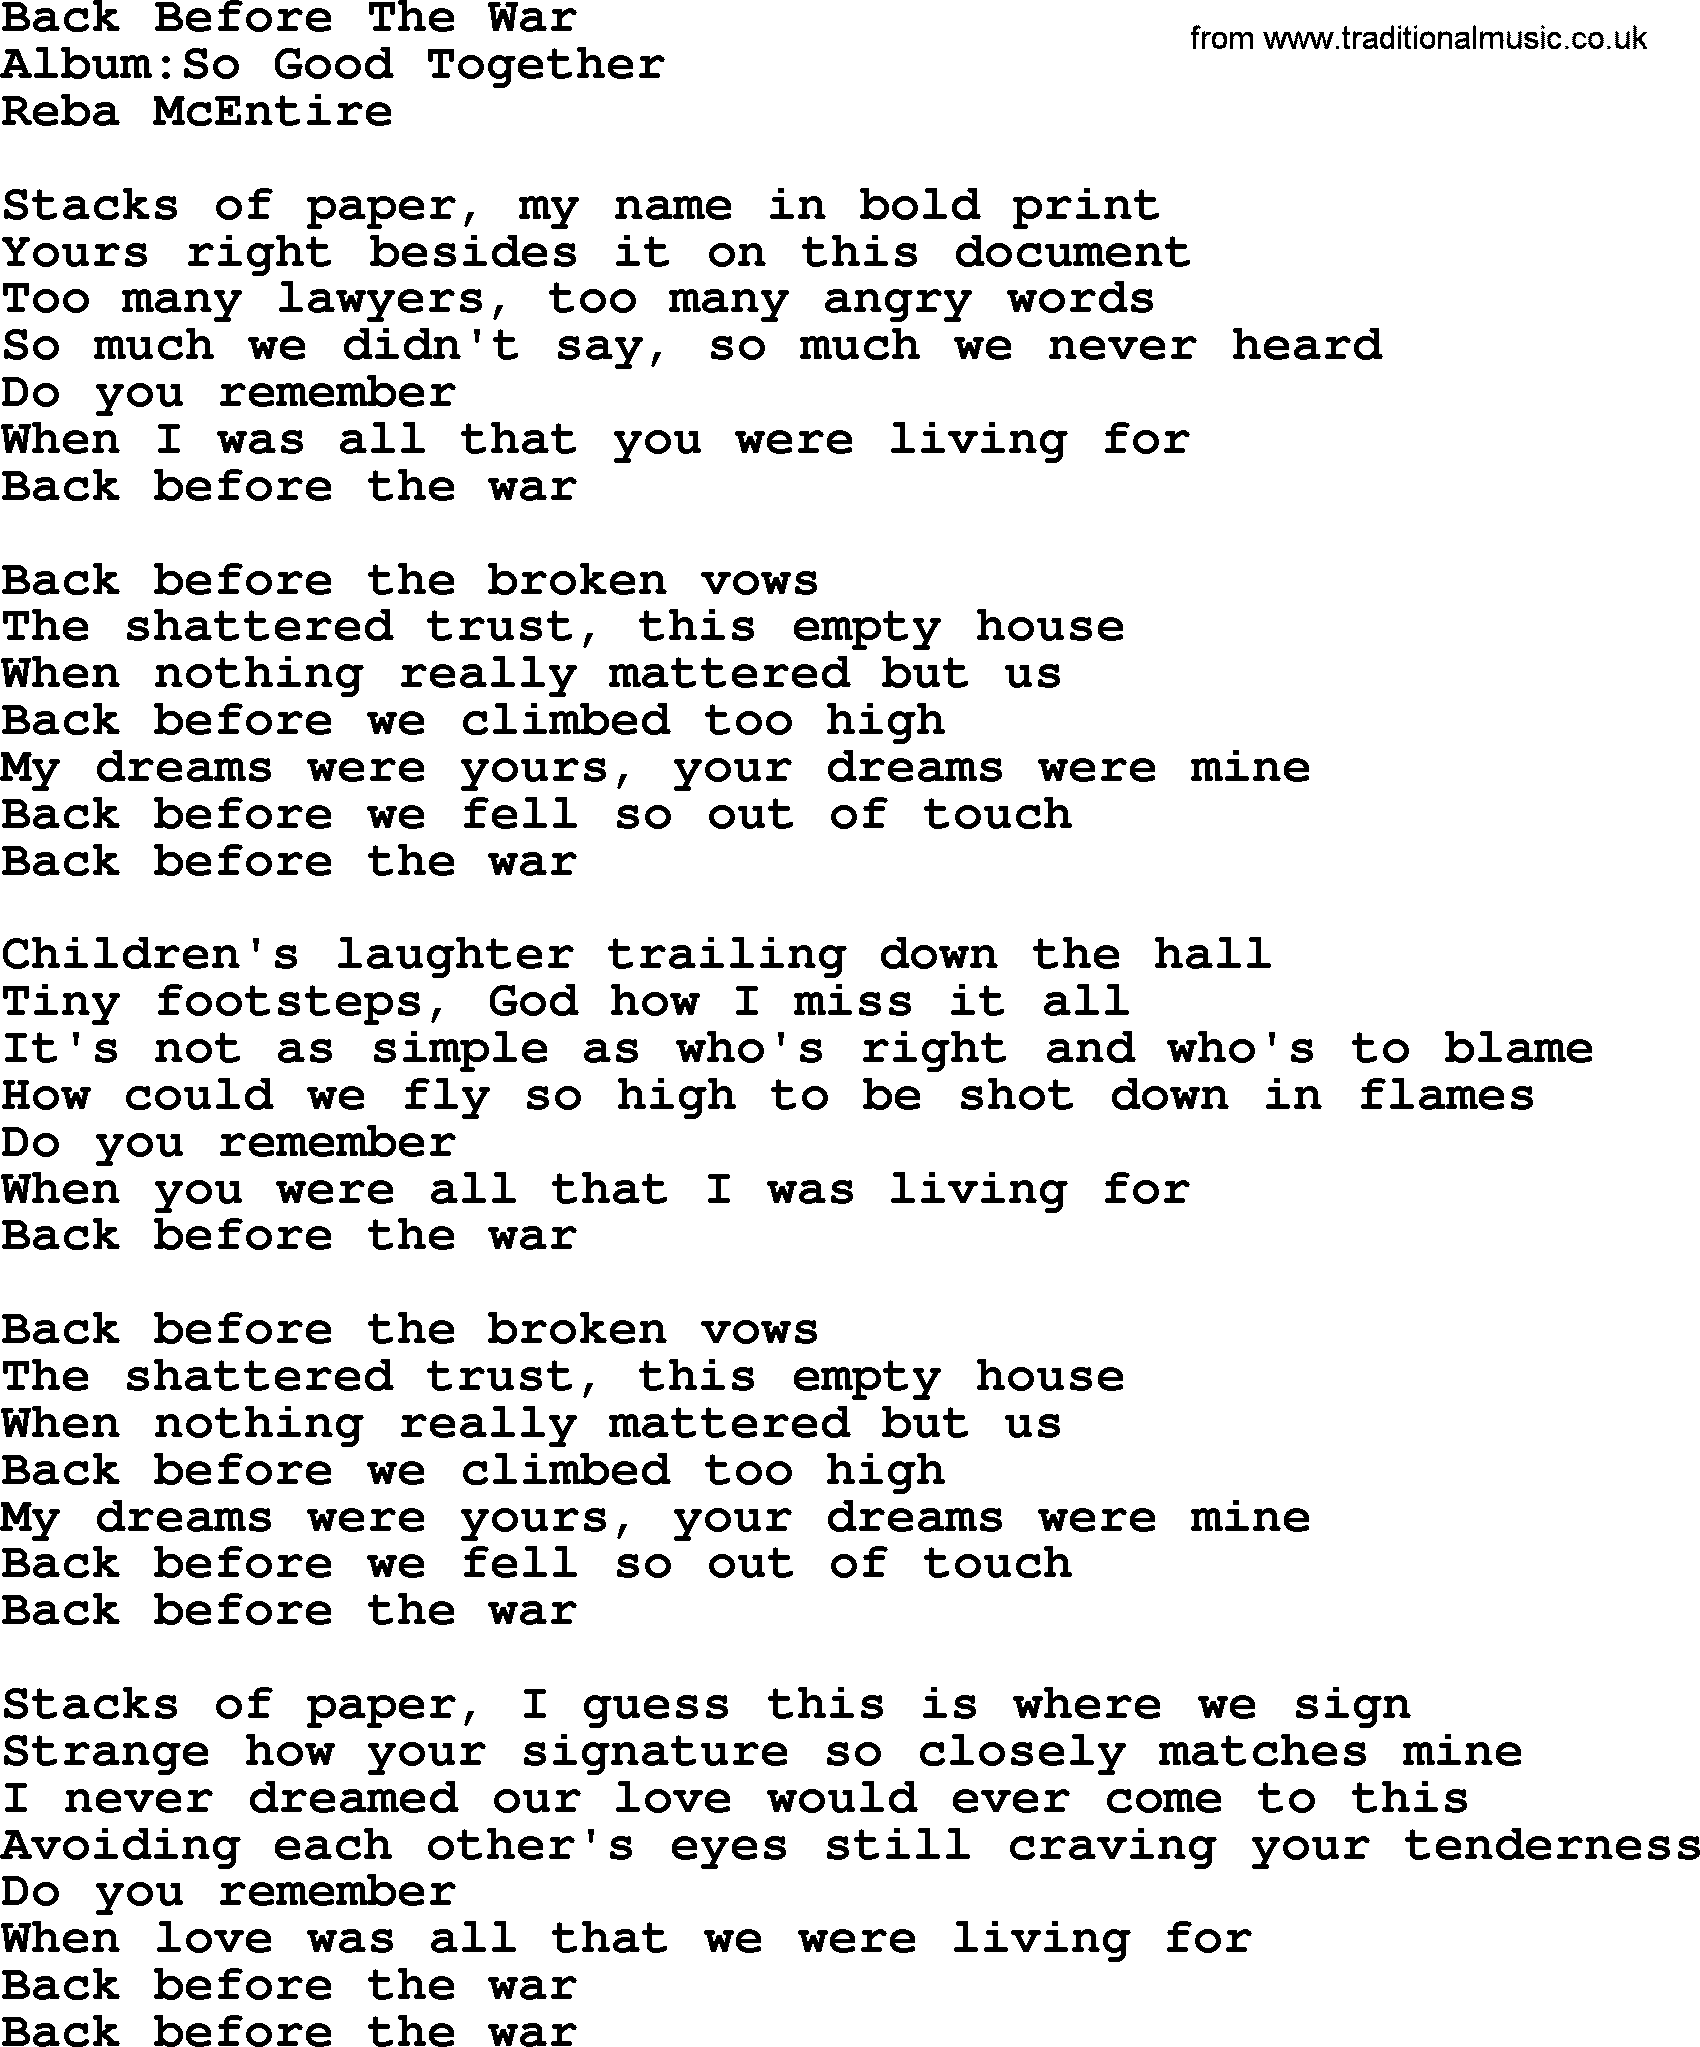 Reba McEntire song: Back Before The War lyrics